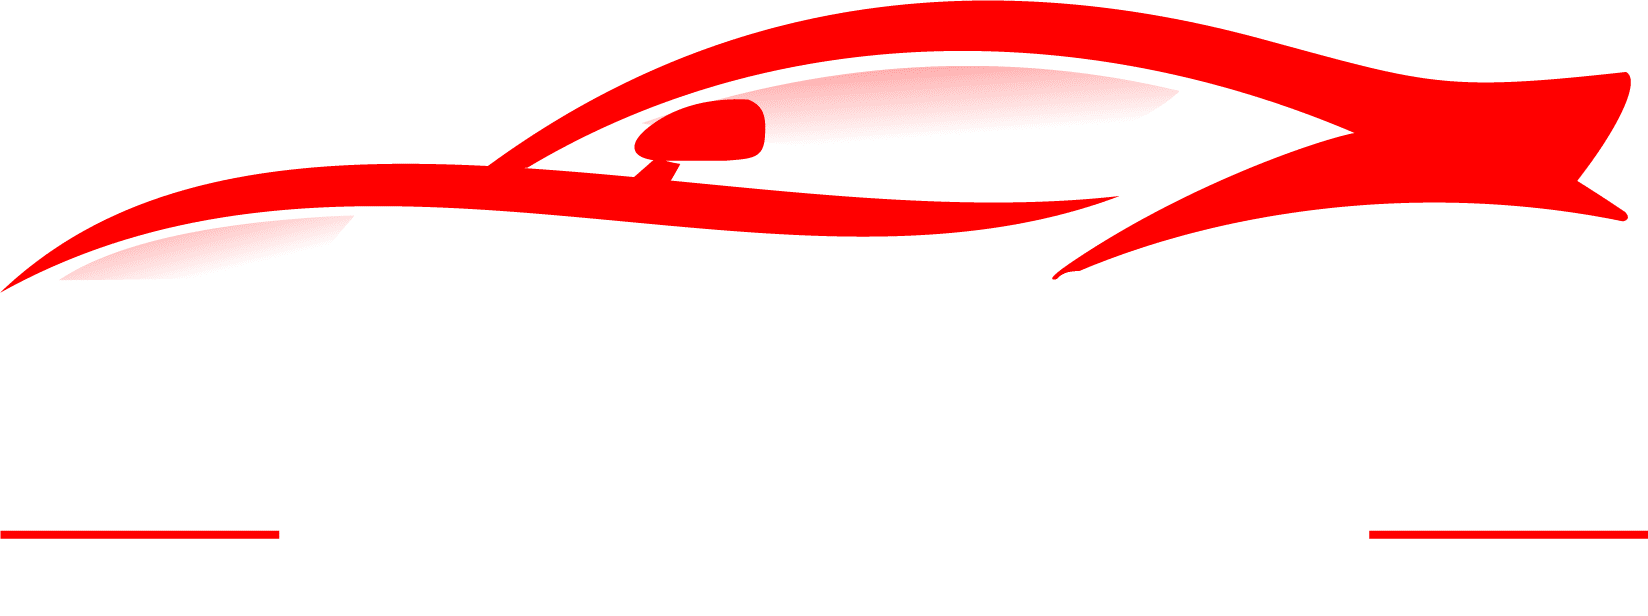 Autobedrijf Bos Hazerswoude Logo